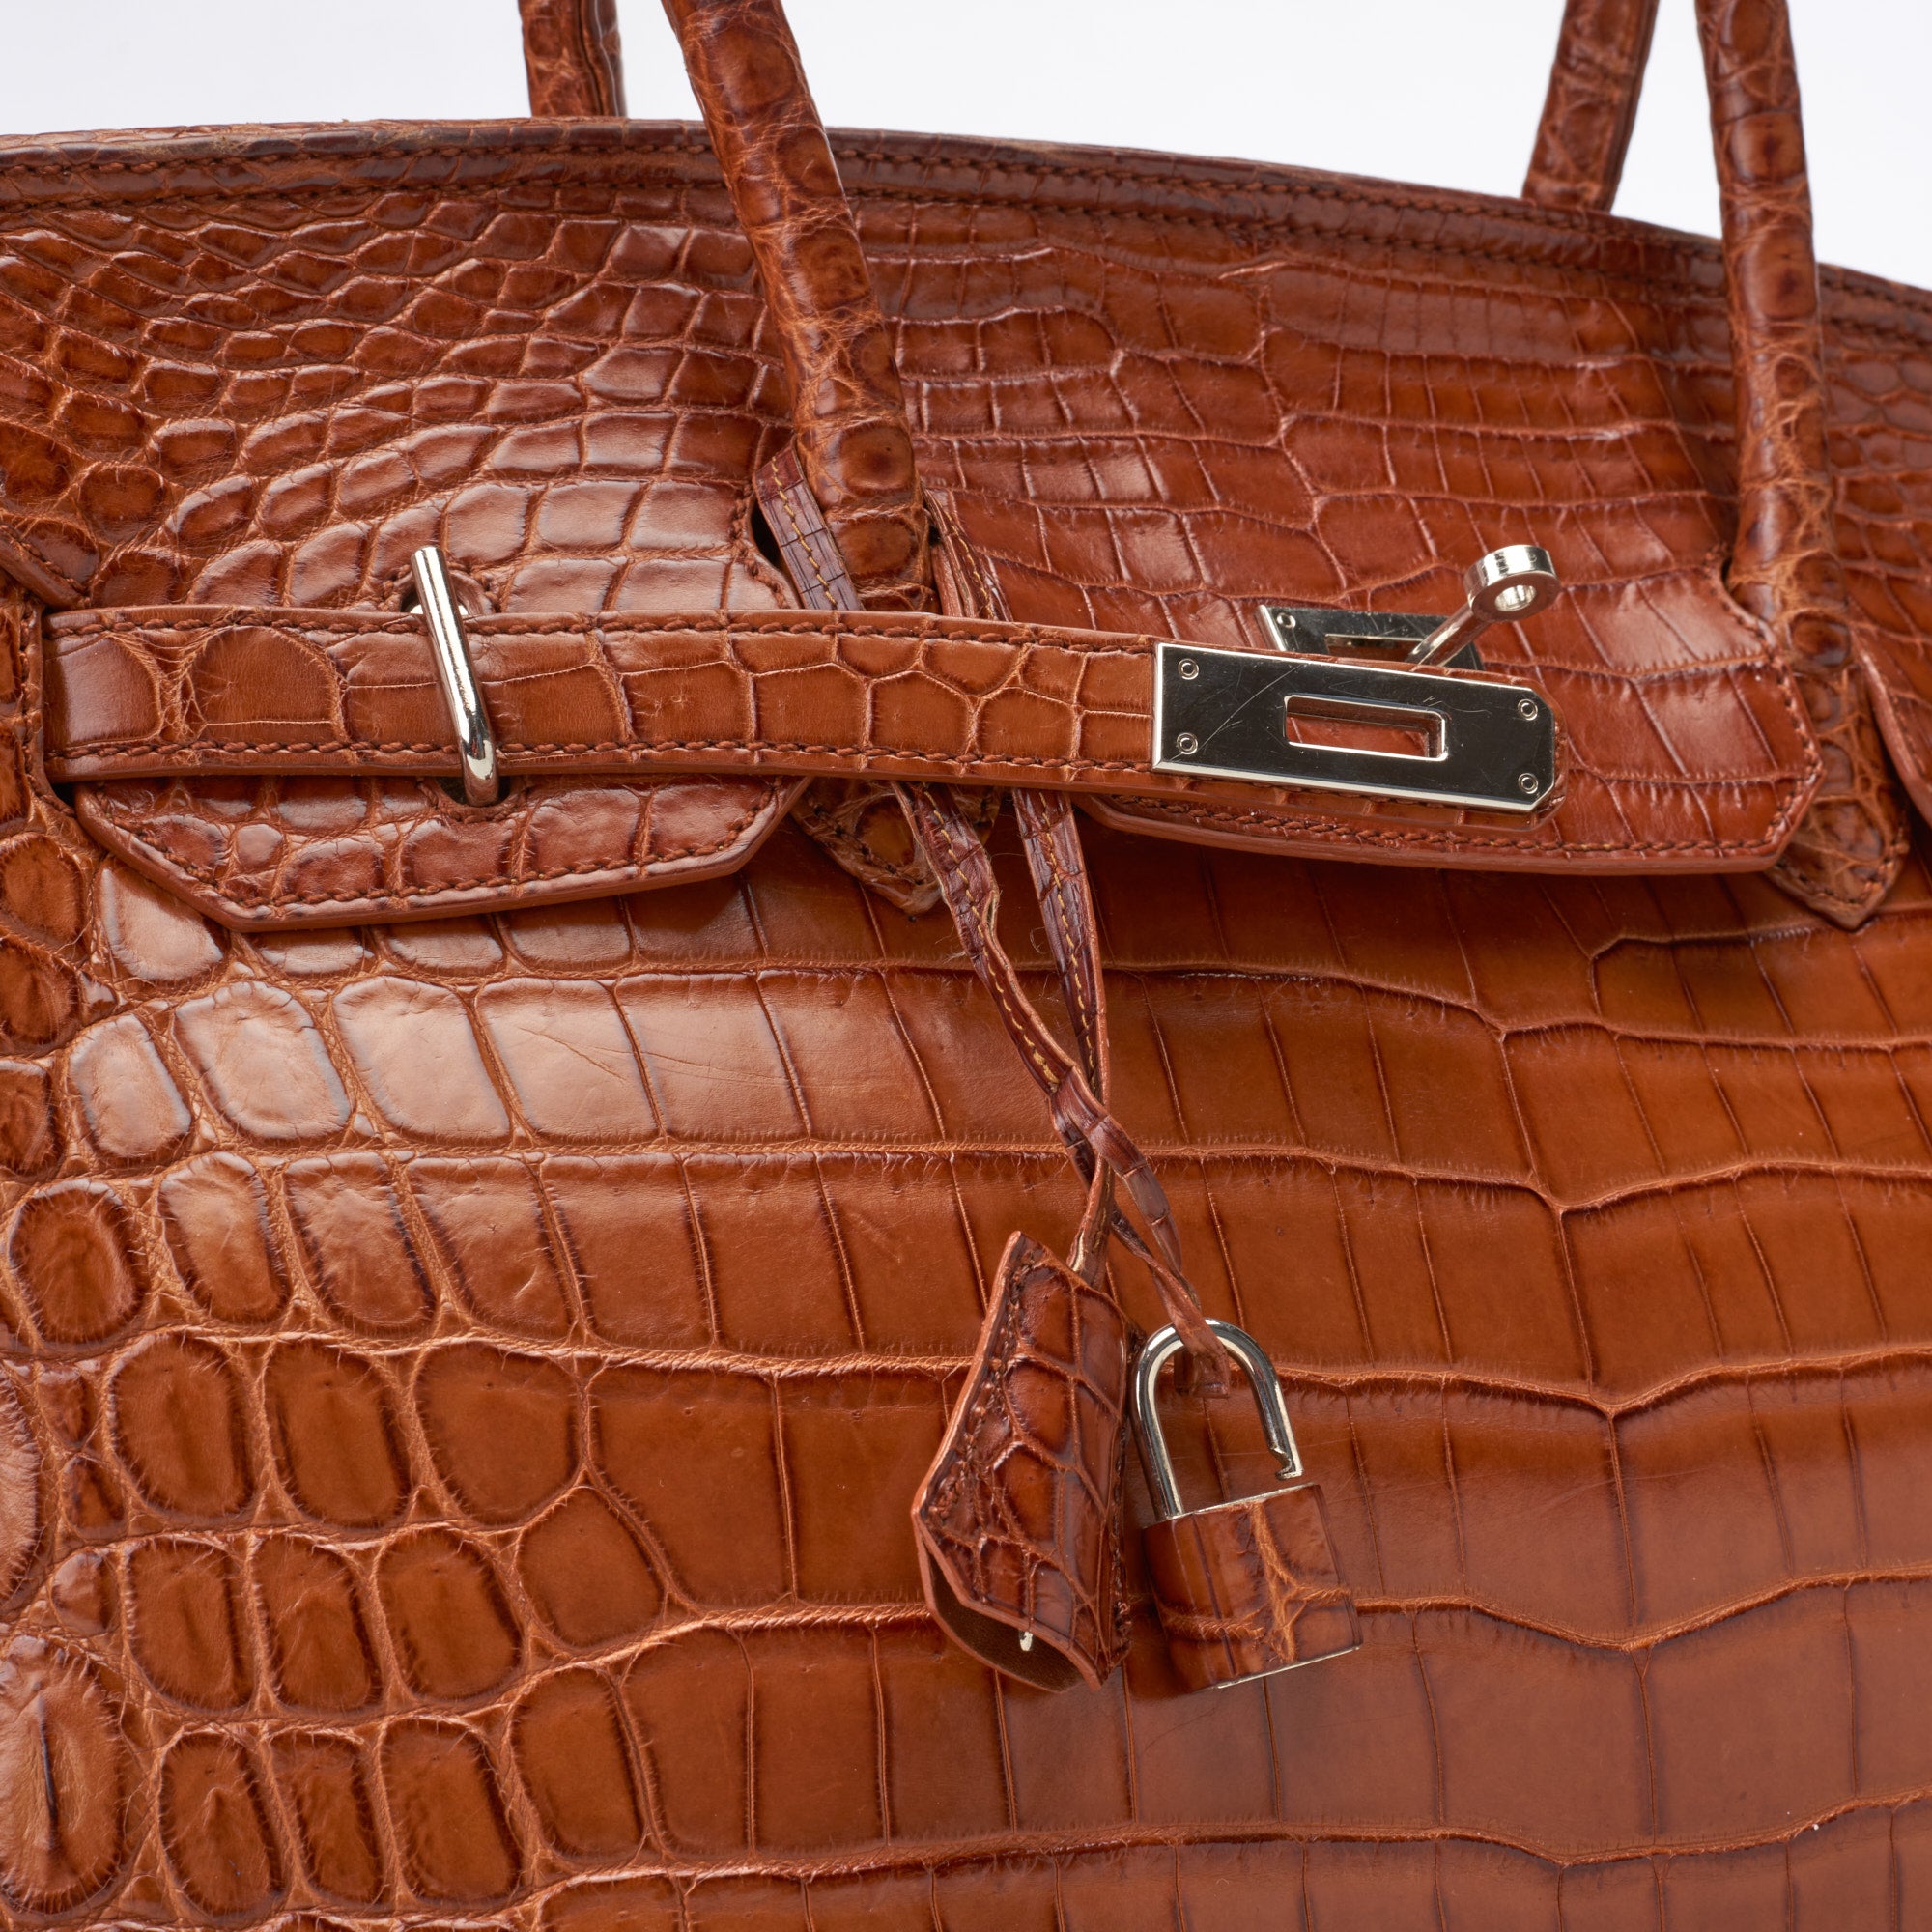 VIA LA MODA Cognac Genuine Nile Crocodile Leather Birkin 35 Style Handbag WOMEN'S BOUTIQUE